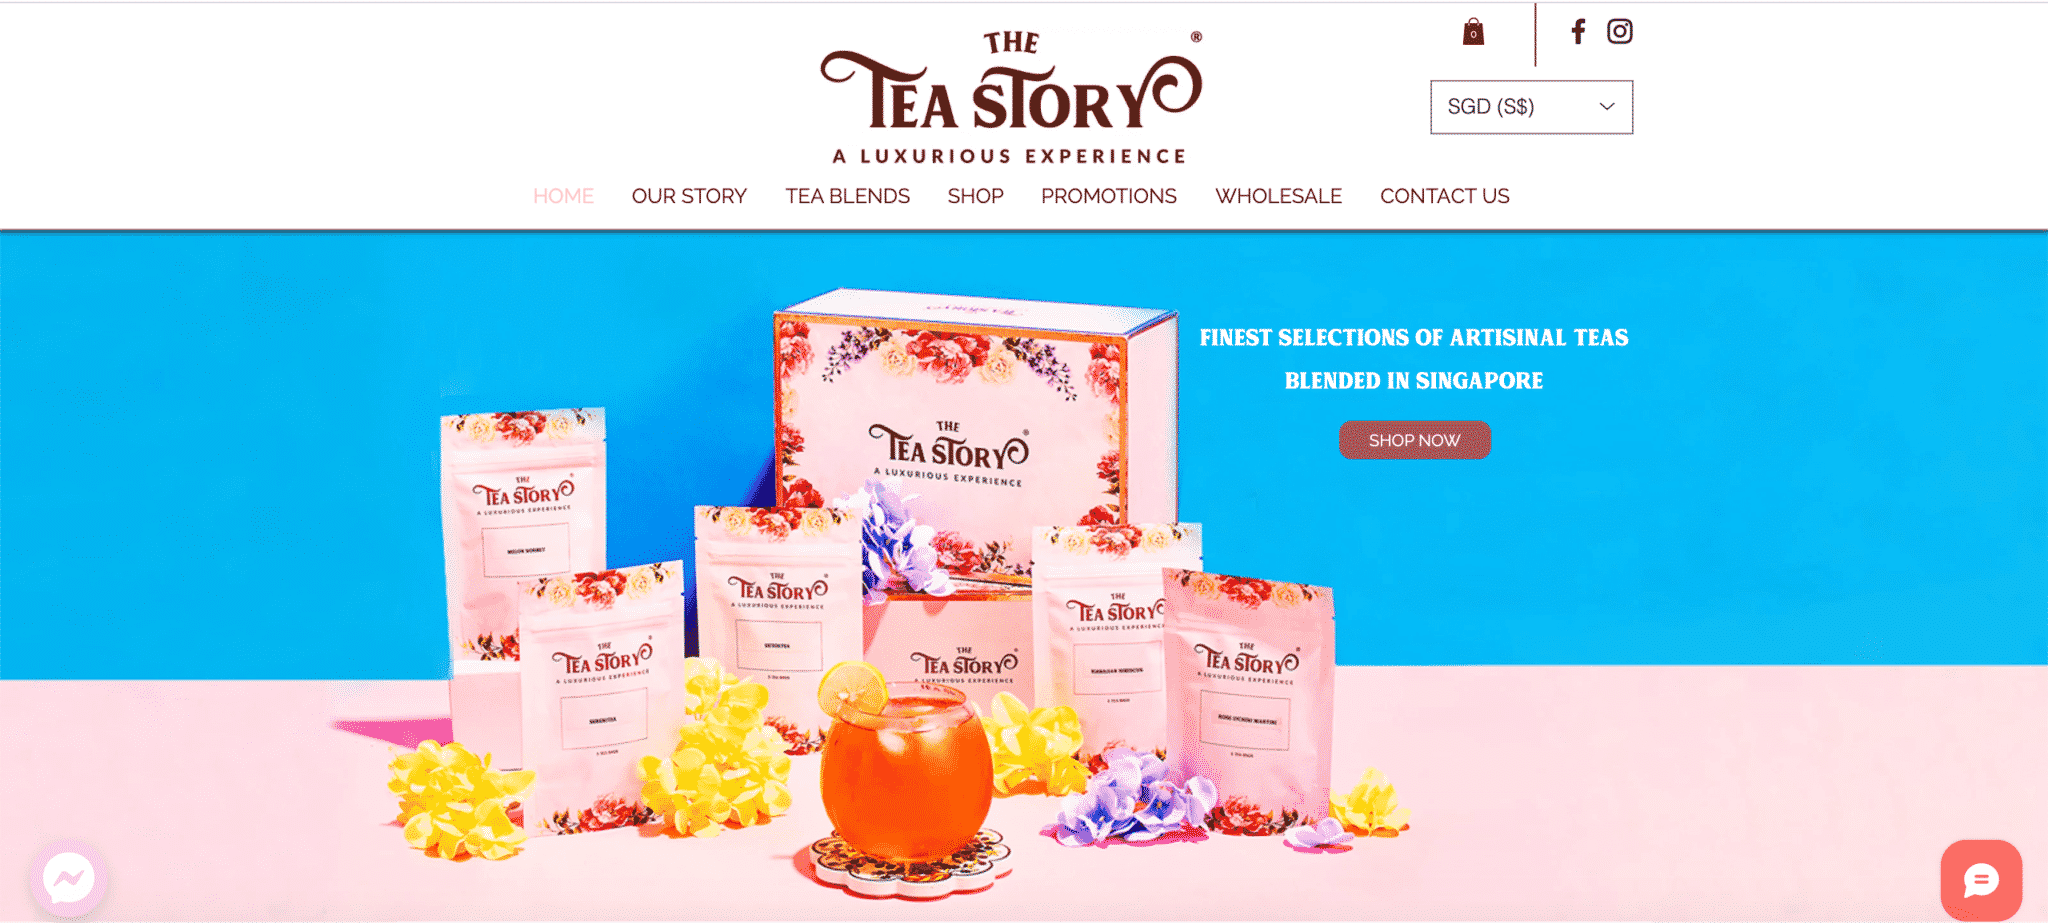 The Tea Story exemples de sites ecommerce Wix